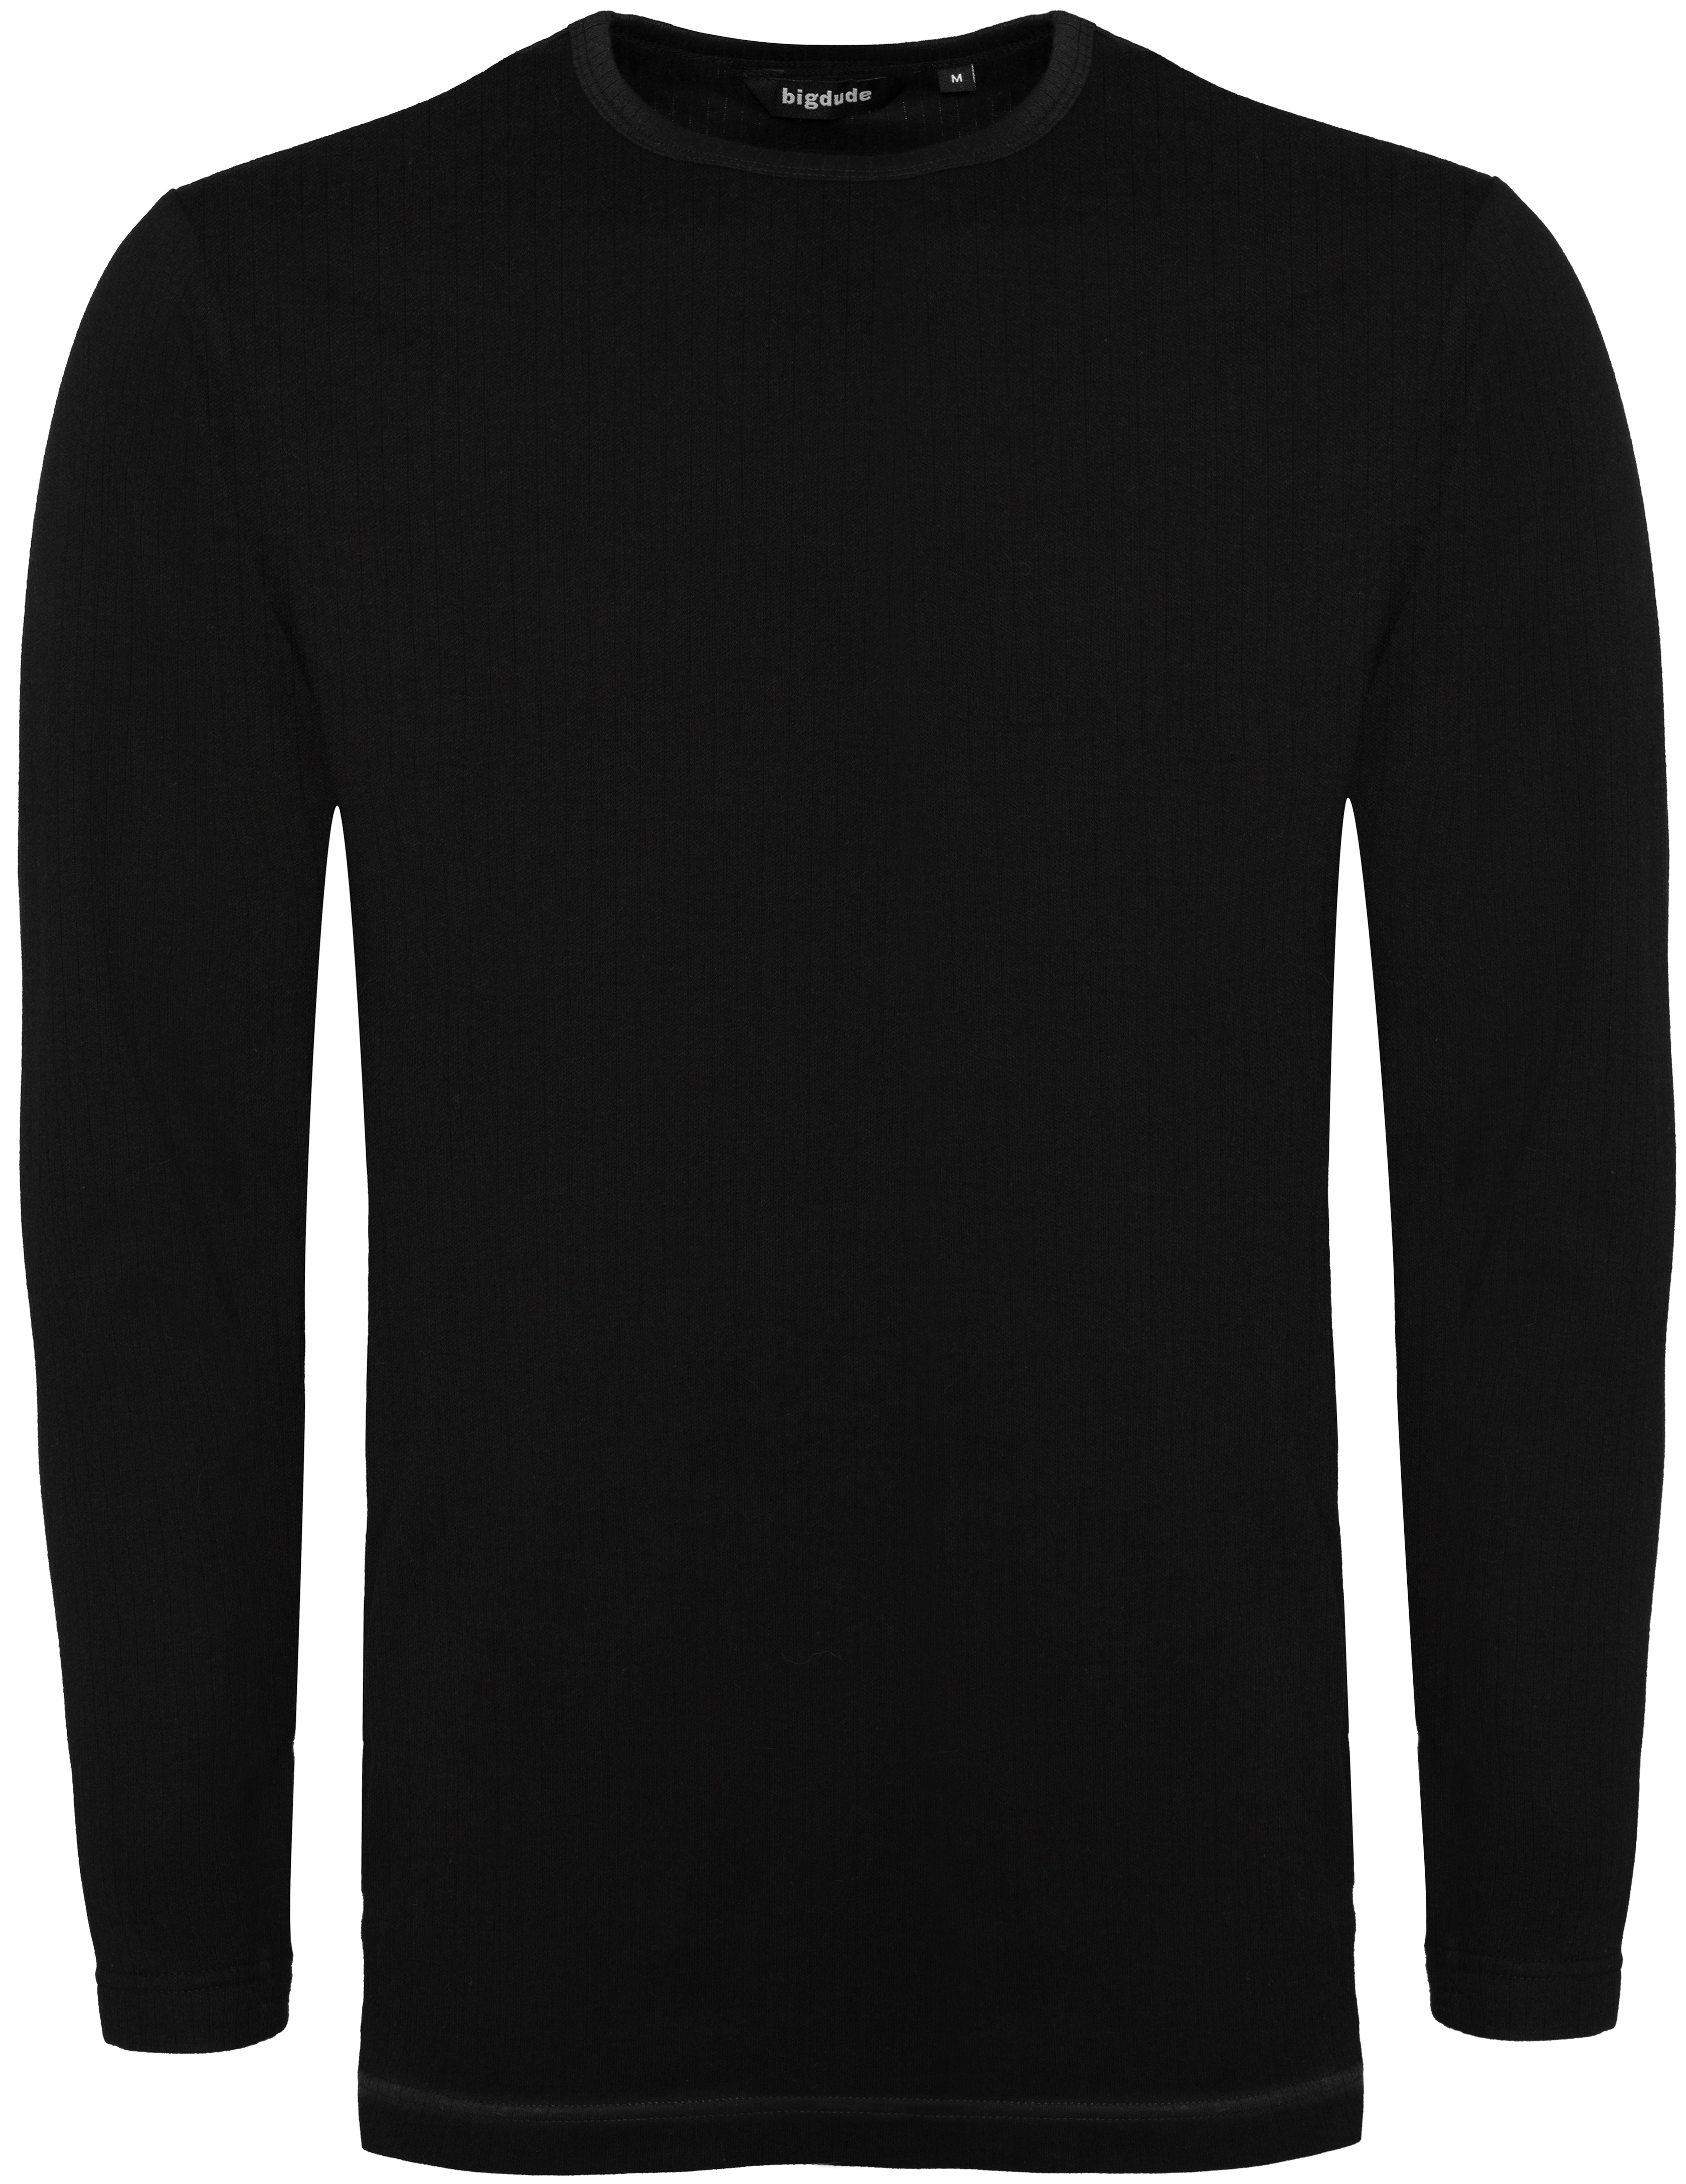 Bigdude Long Sleeve Thermal T-Shirt Black | BigDude